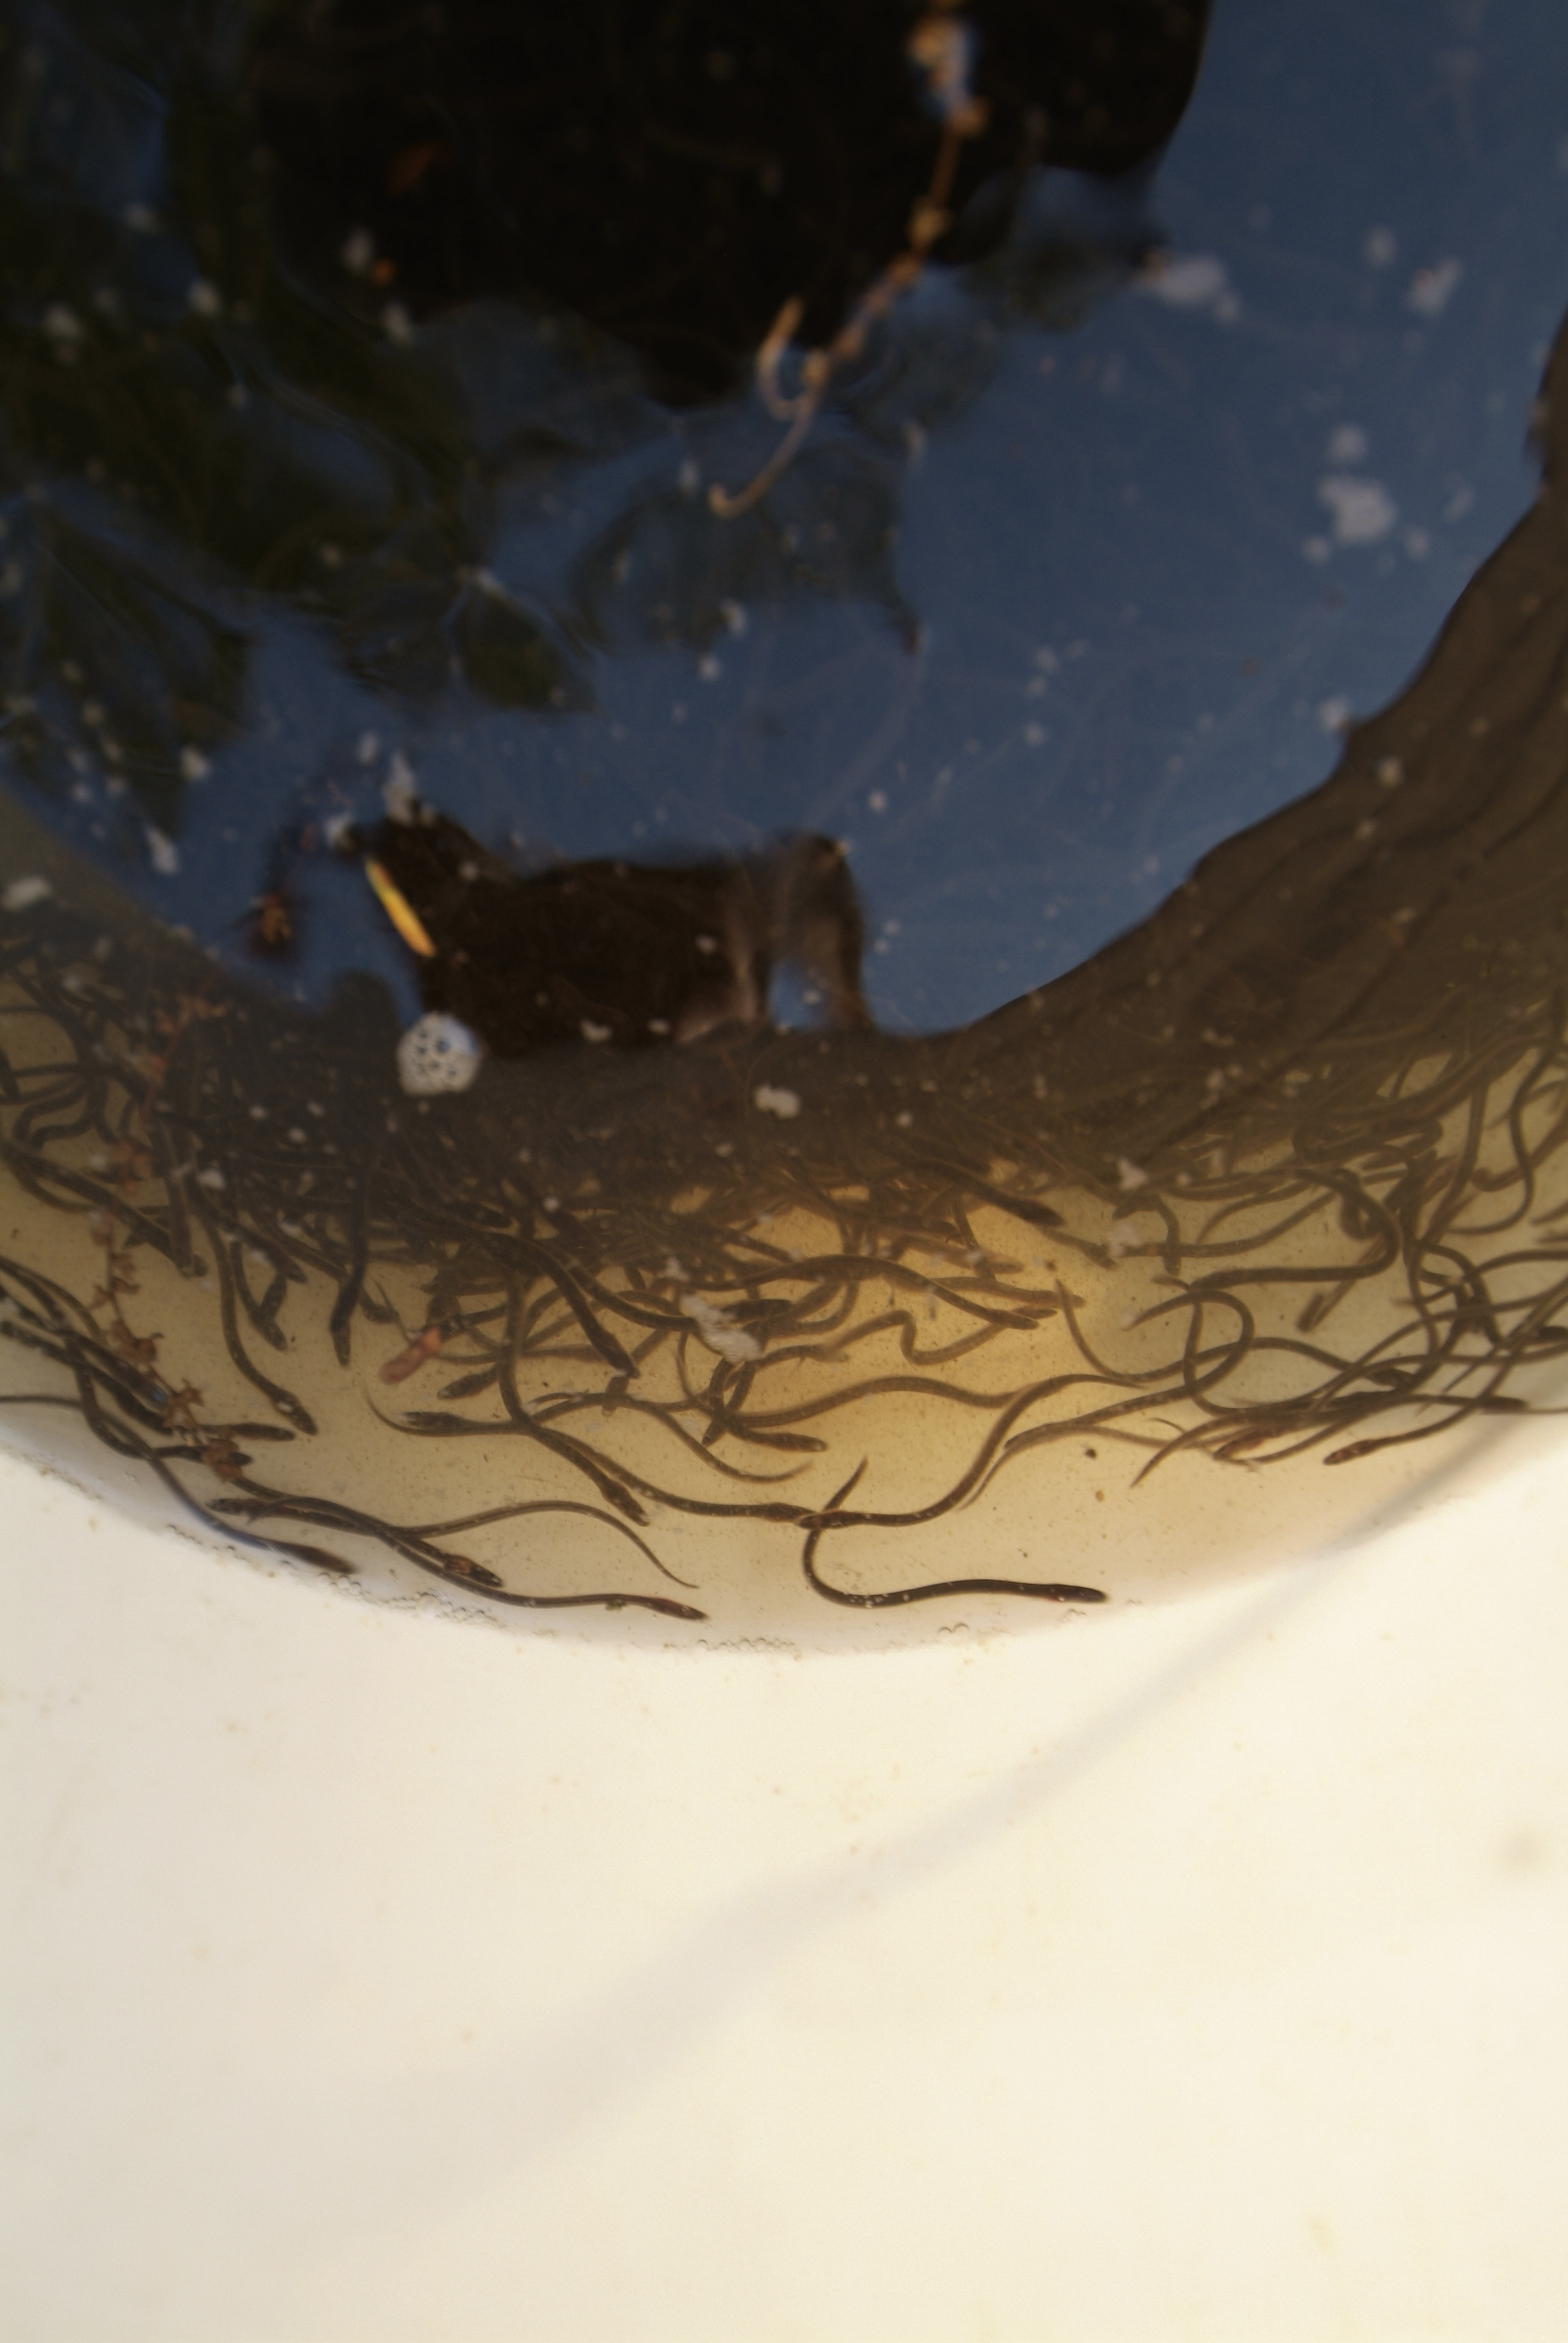 Glass eels in a bucket. Robert Lorenz.